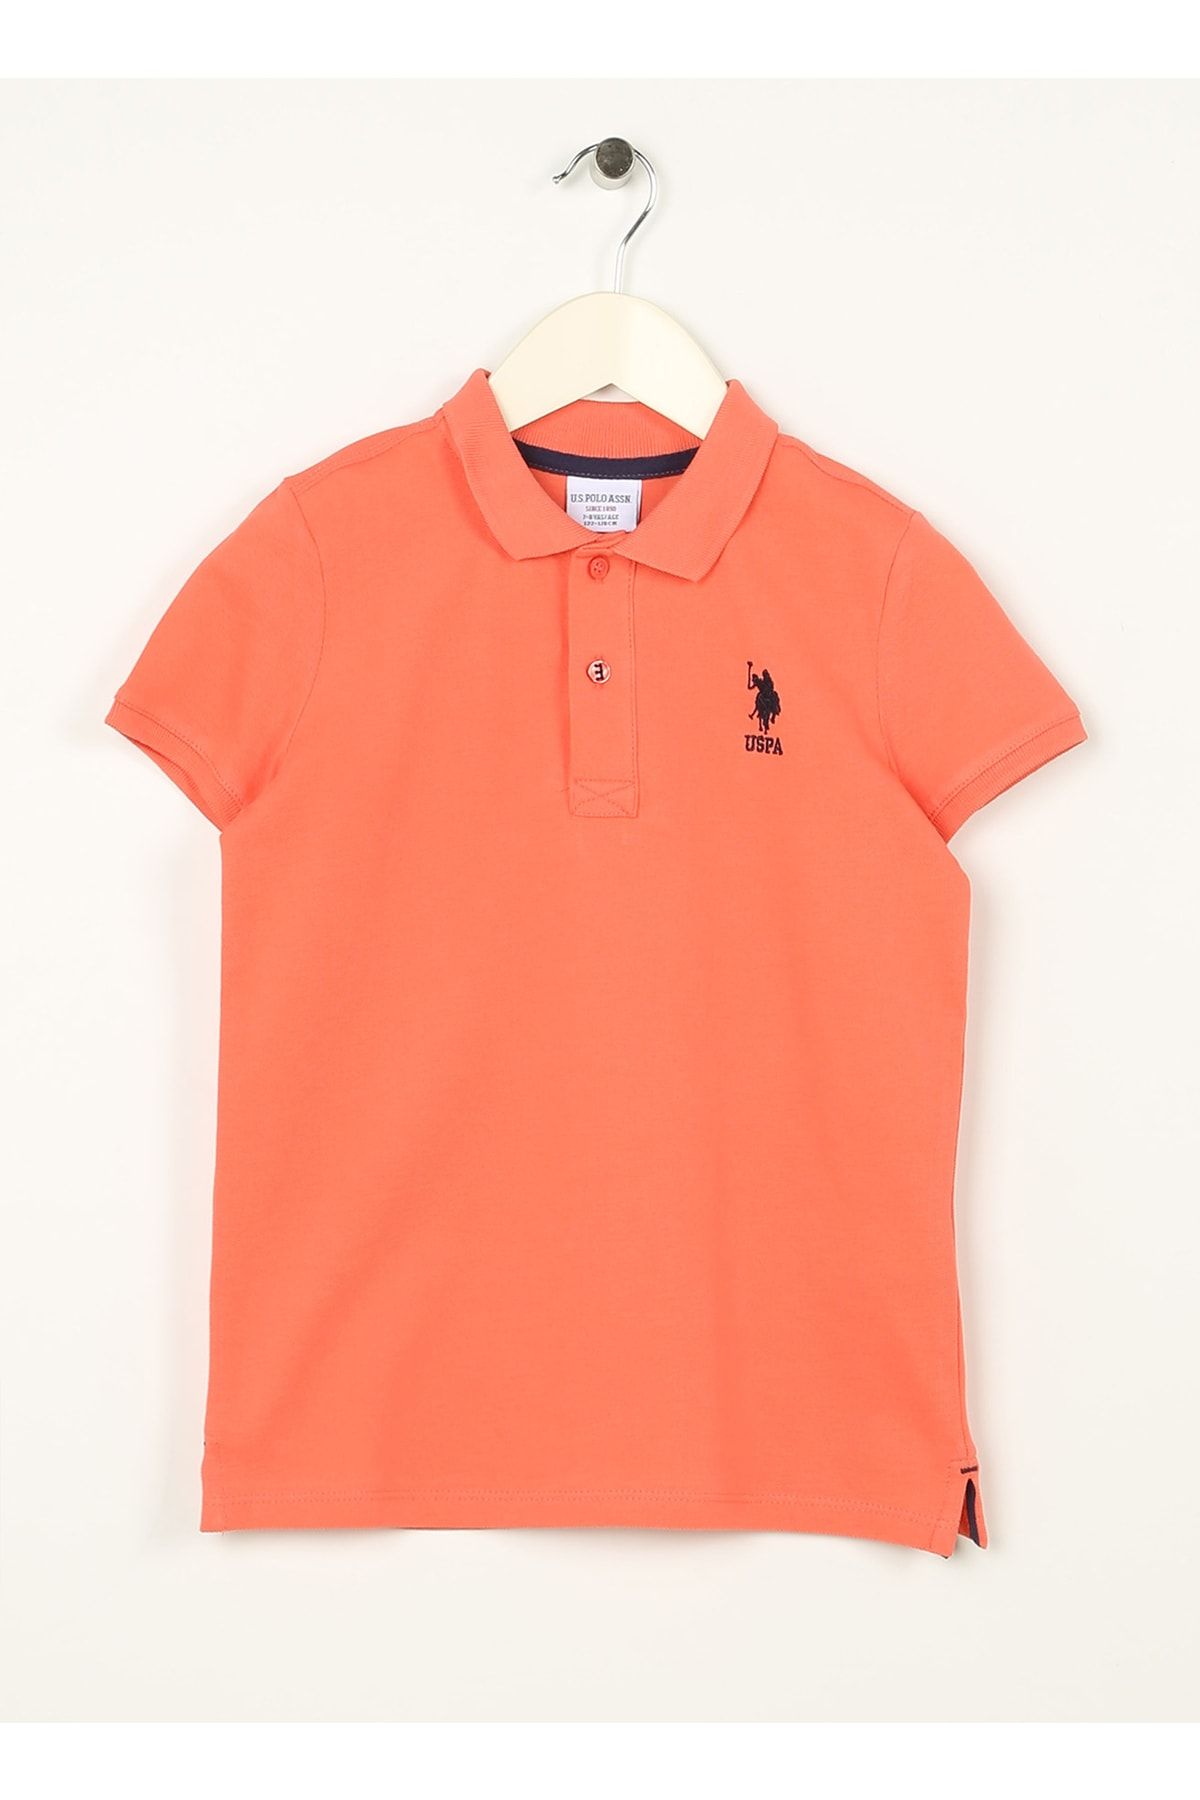 U.S. Polo Assn. Düz Pembe Erkek Çocuk T-shirt Tp01ıy023